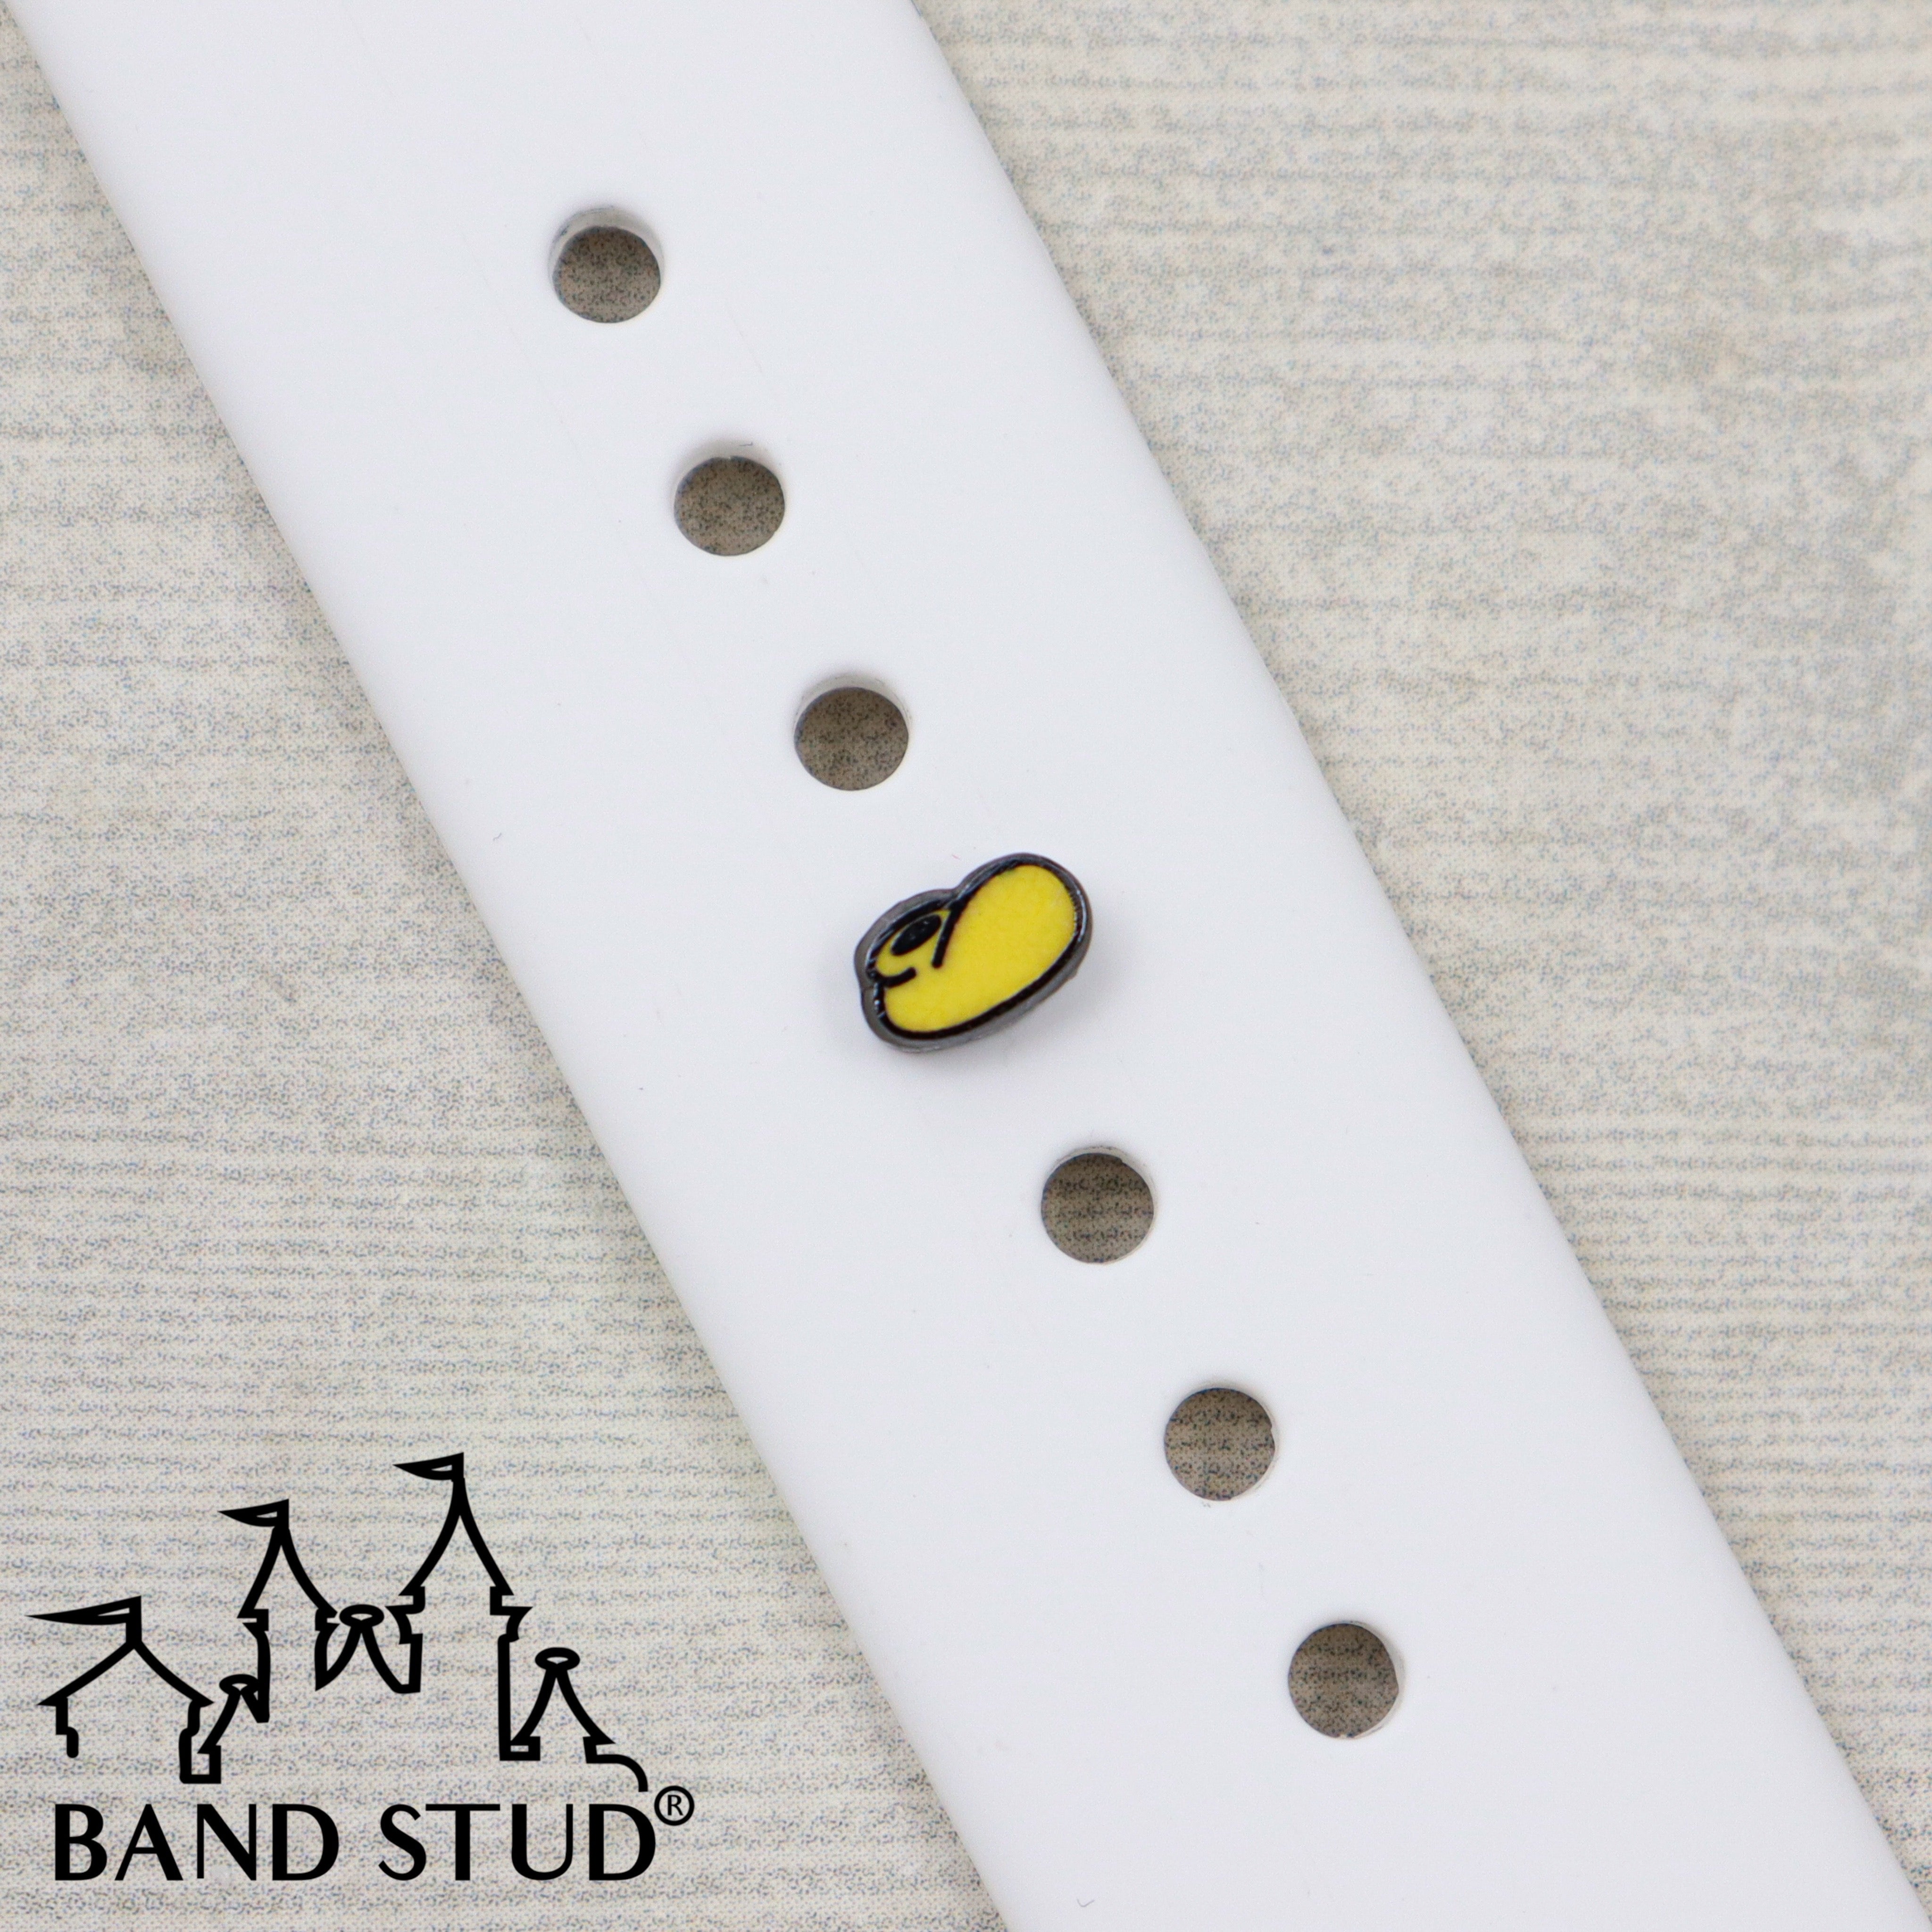 Band Stud Minis® - Deconstructed Magic